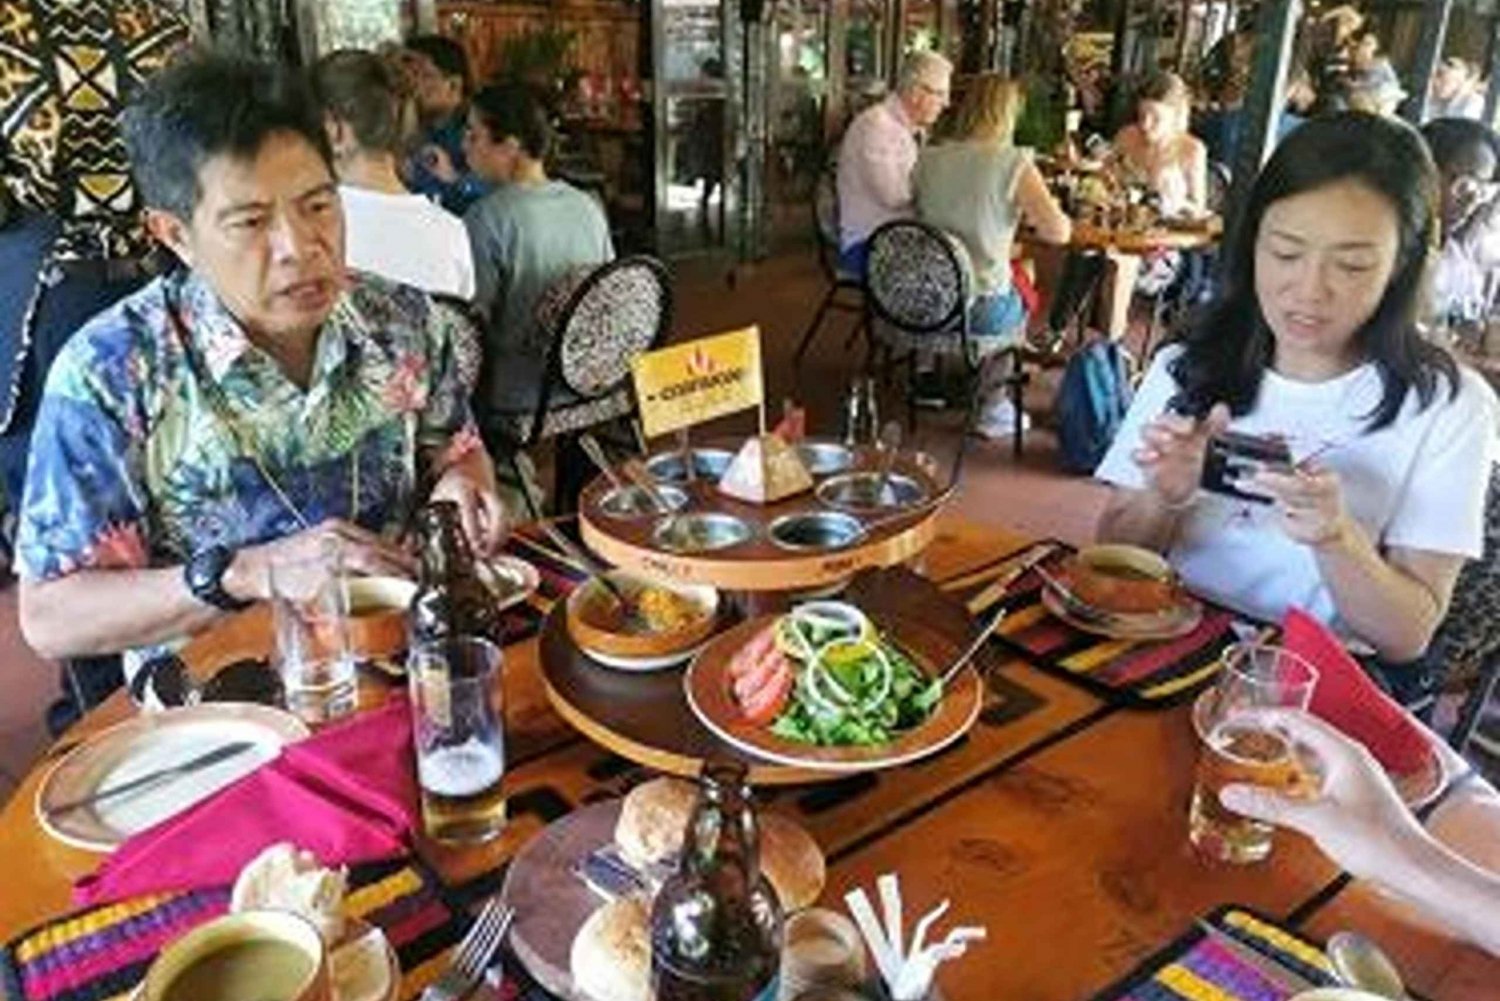 Carnivore Restaurant: Lunch or Dinner Experience in Nairobi.